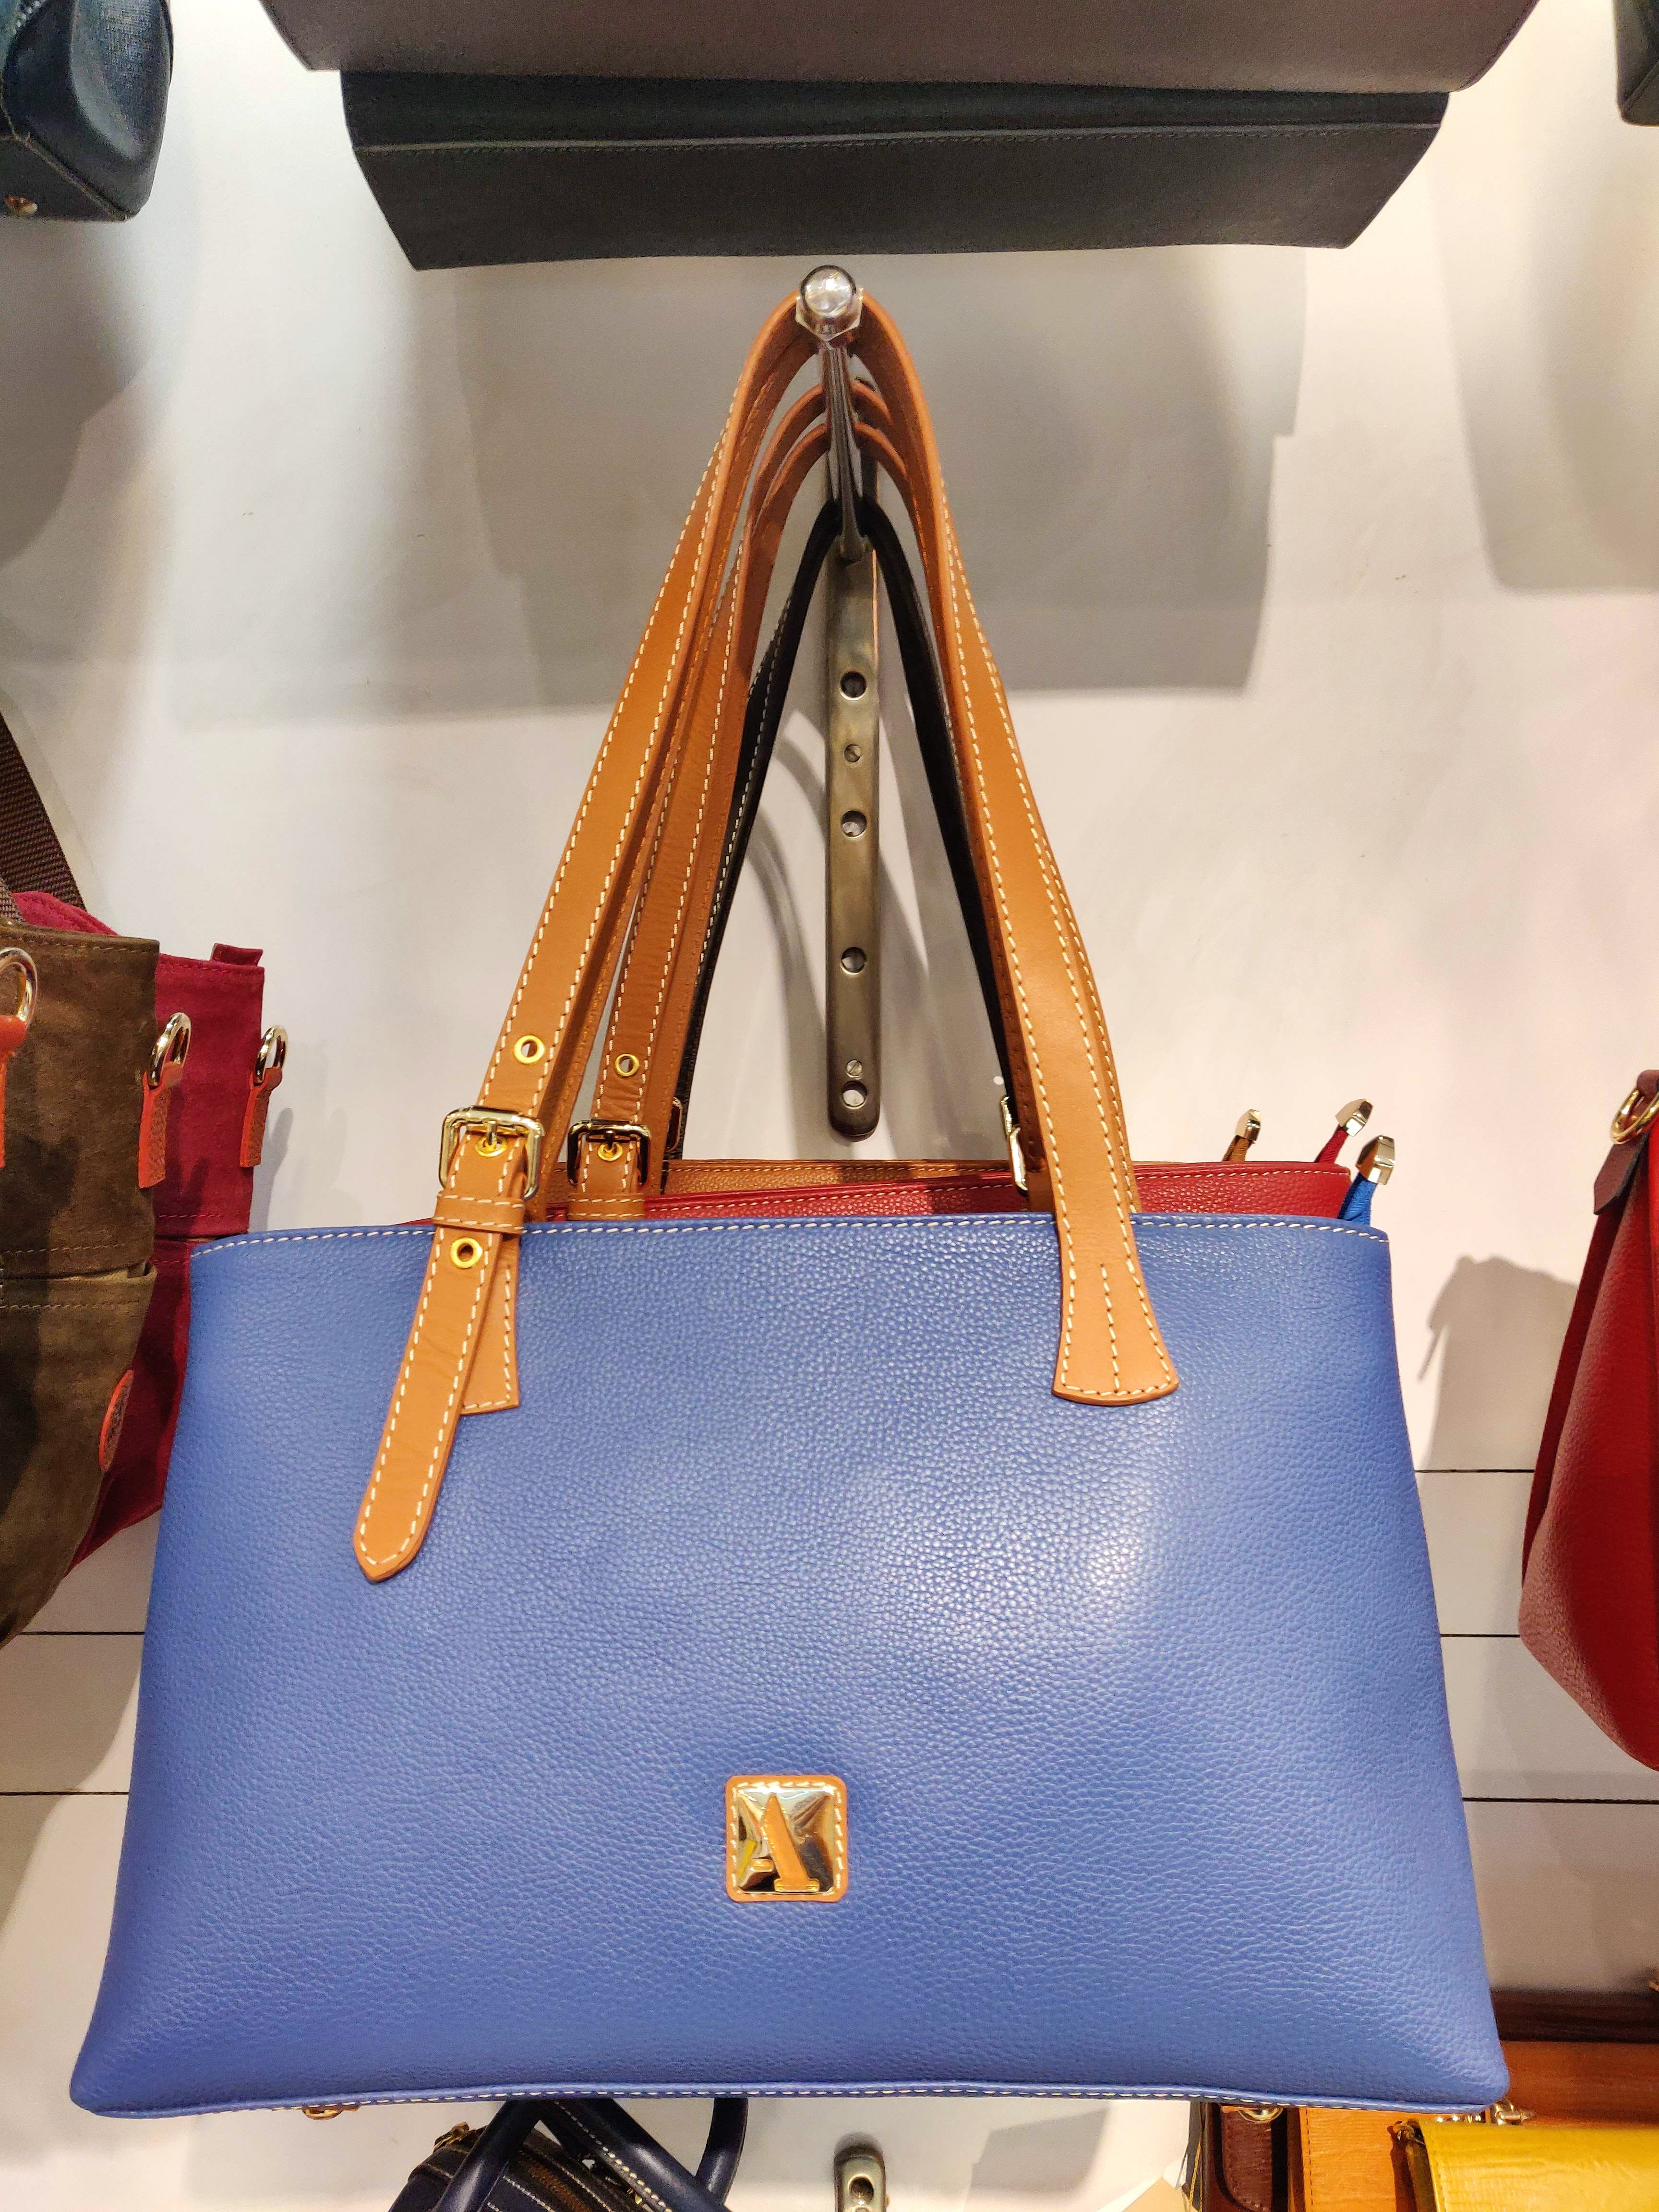 Handbag,Bag,Blue,Leather,Fashion accessory,Brown,Electric blue,Orange,Fashion,Tote bag